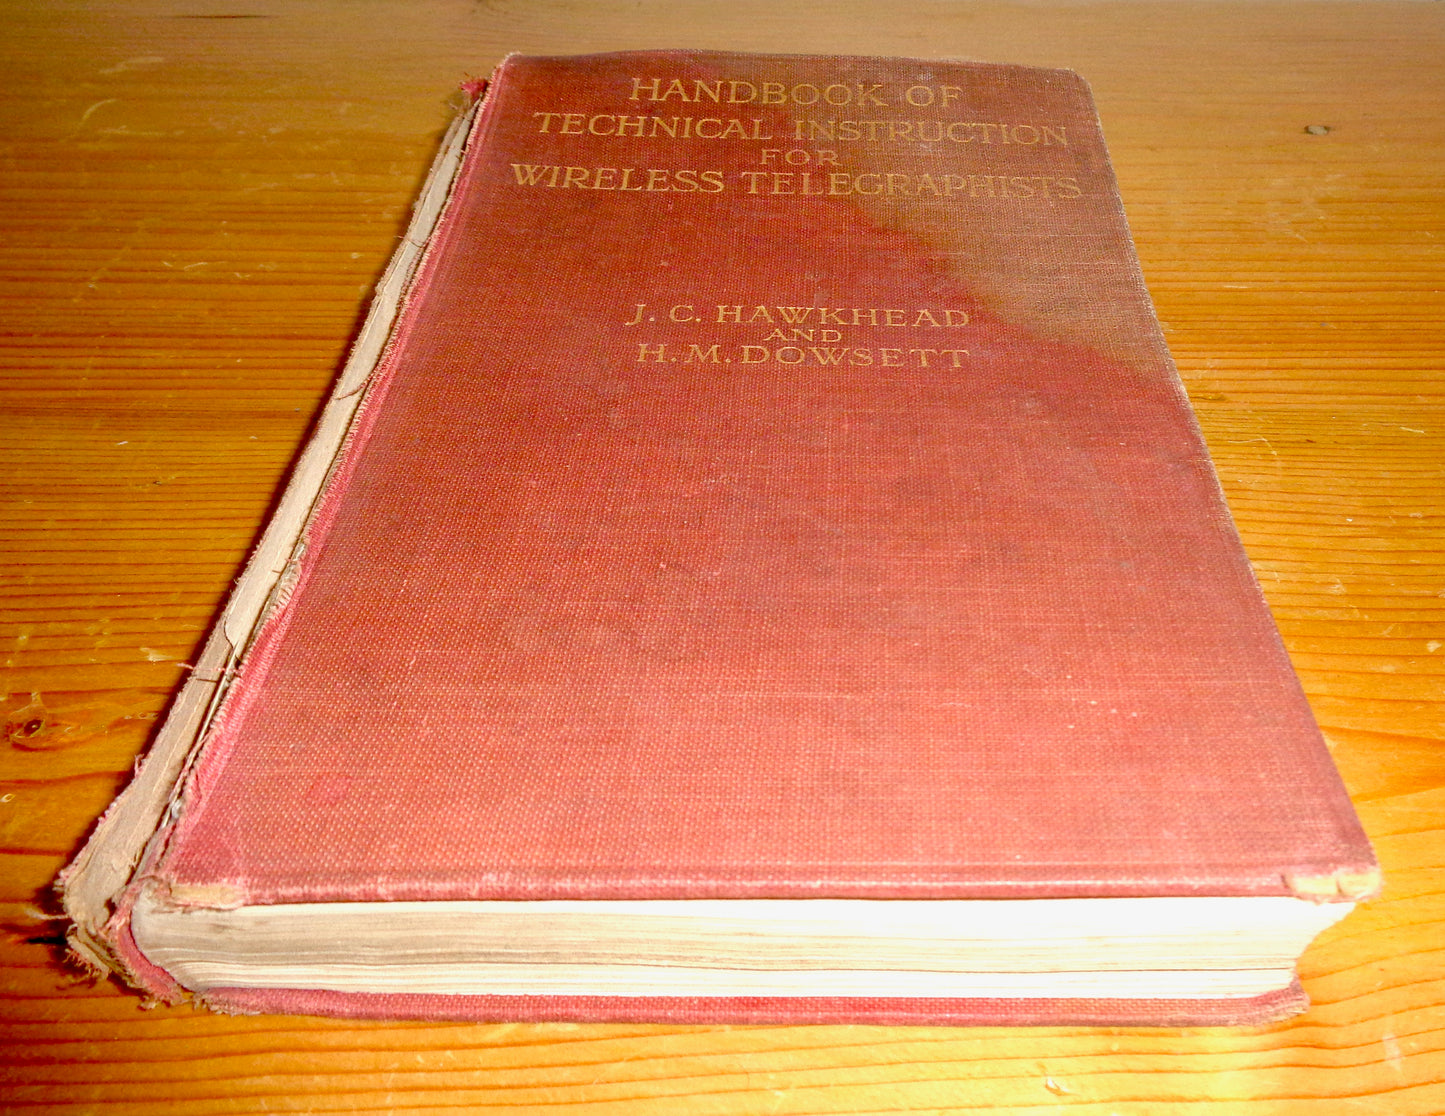 1915 Handbook of Technical Instruction for Wireless Telegraphists by JC Hawkhead / HM Dowsett